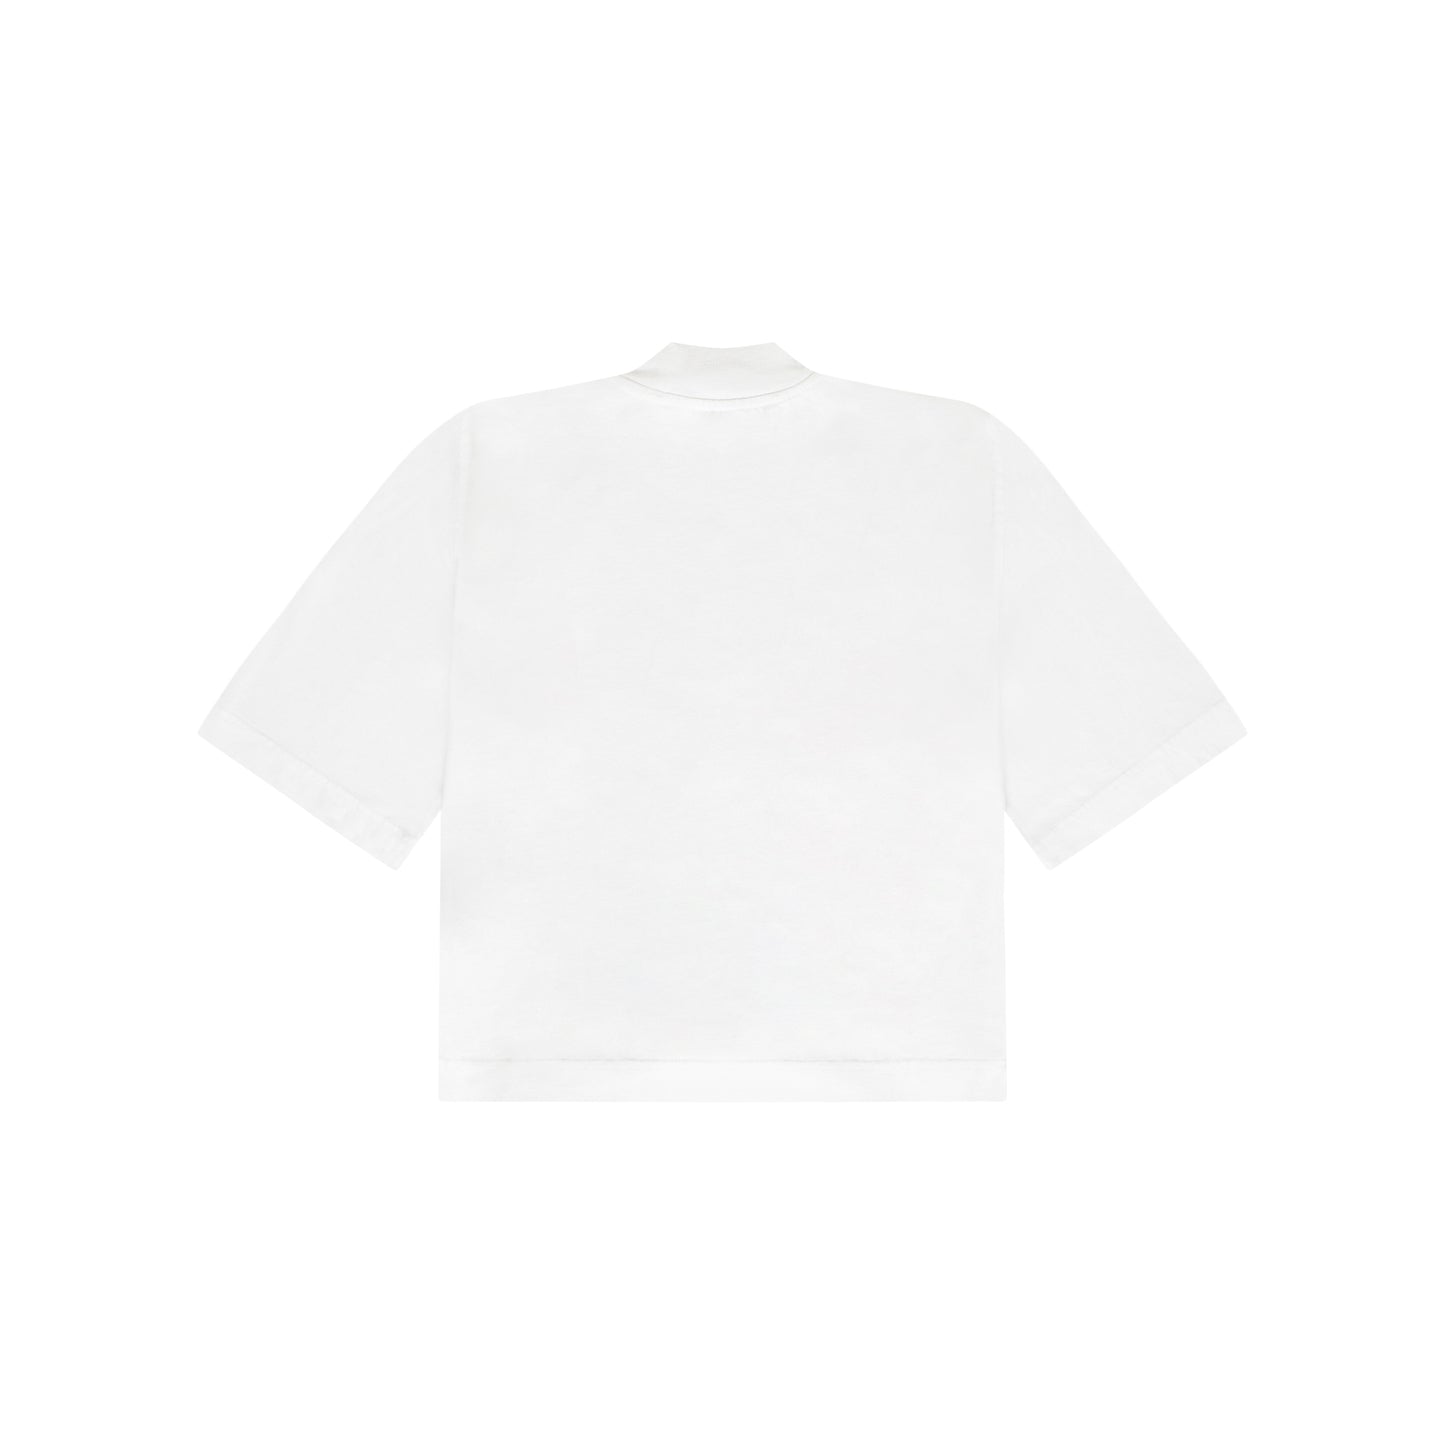 Miami Sprayed Logo T-Shirt in White